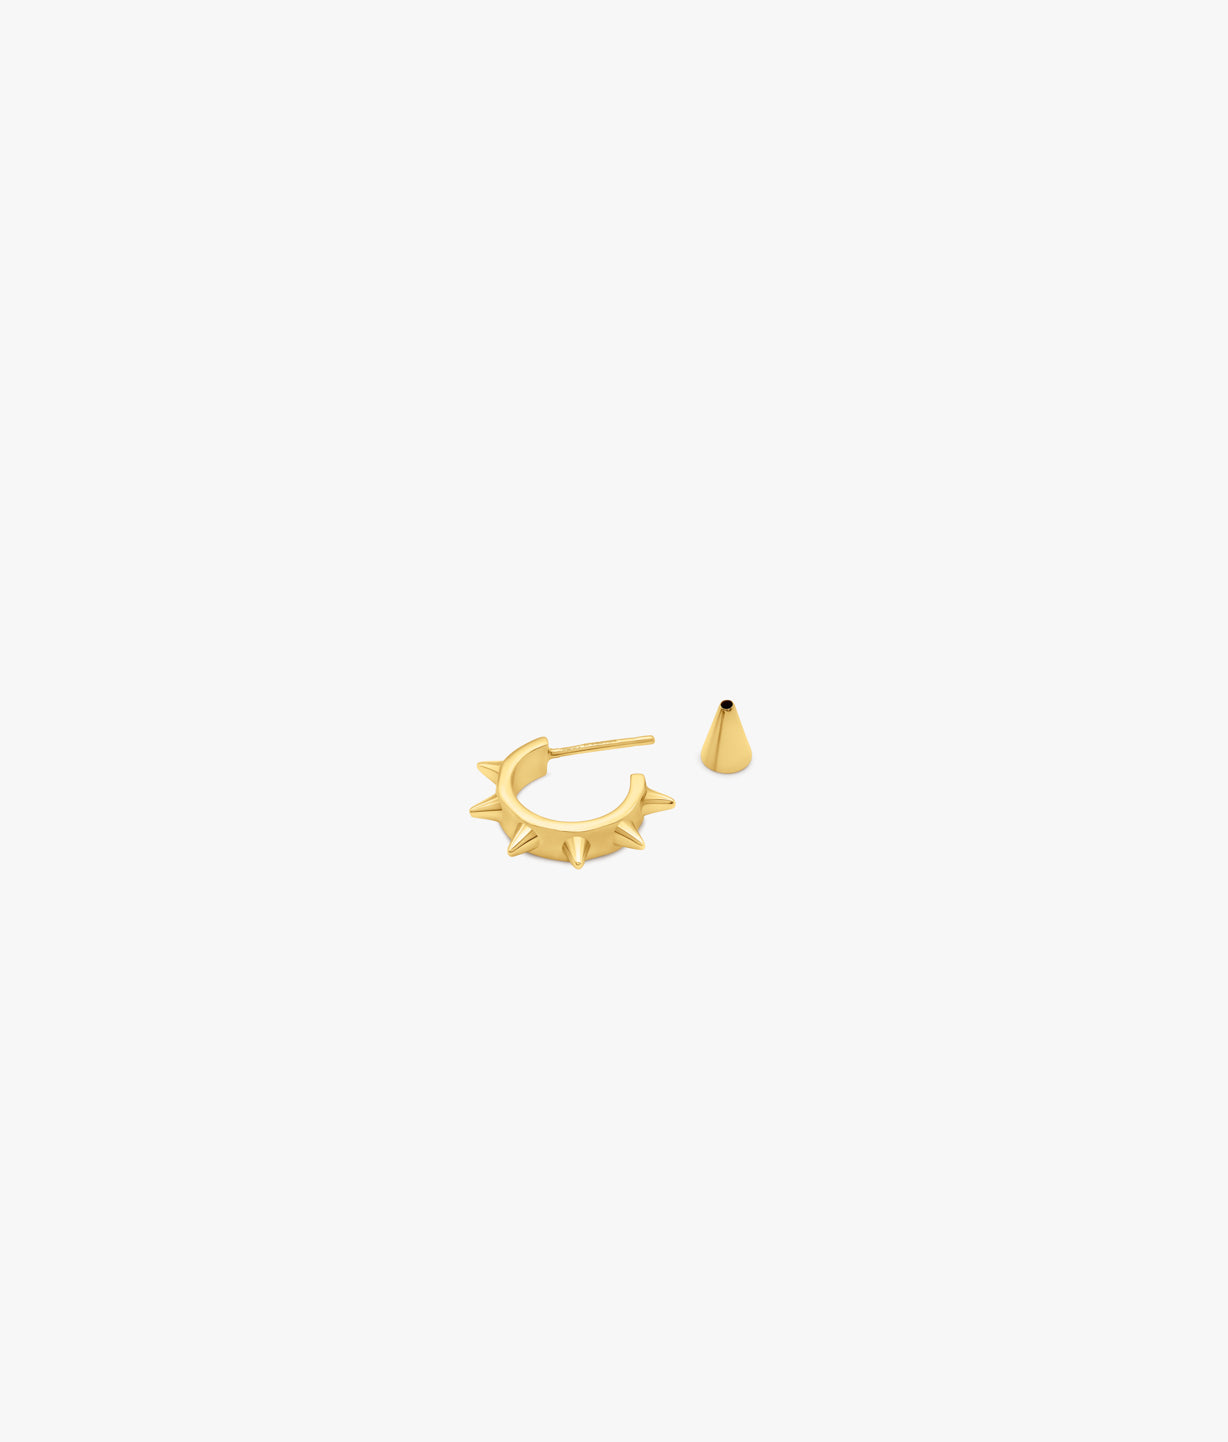 Suot x Abra Gold Plated Silver Spike Single Earring